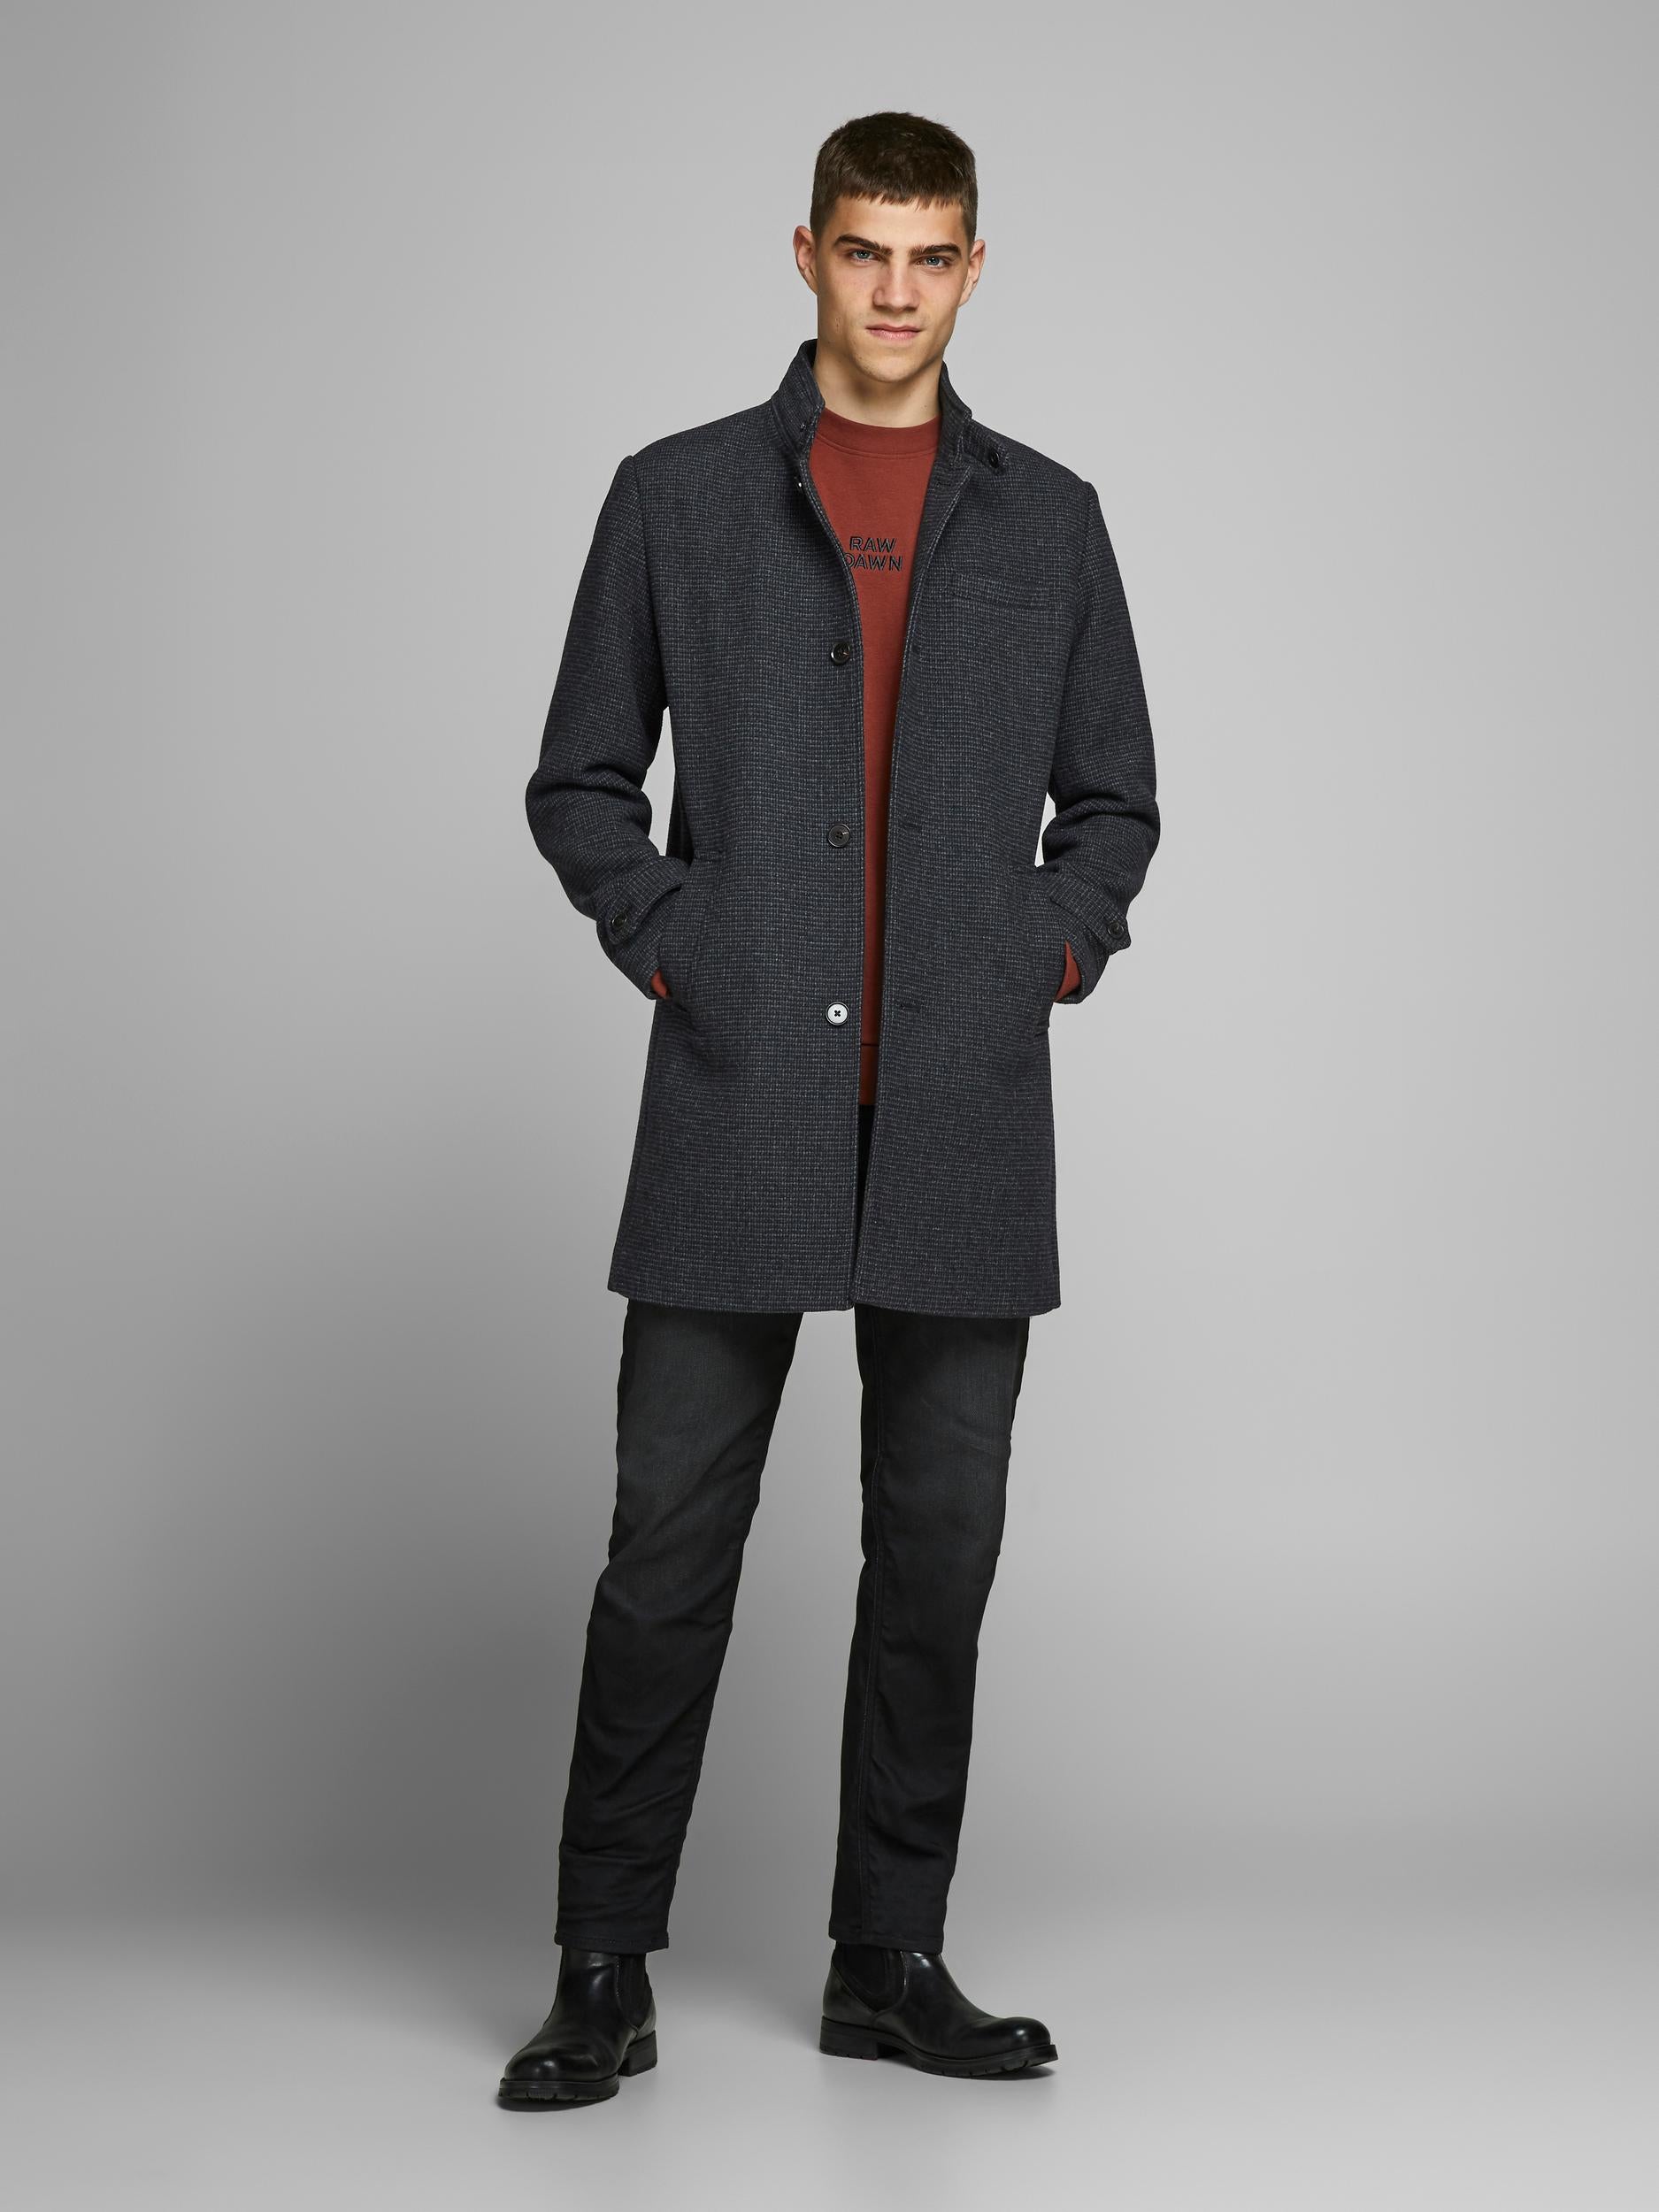 Men's Blamelton Wool Coat Dark Grey-Model Full Front View